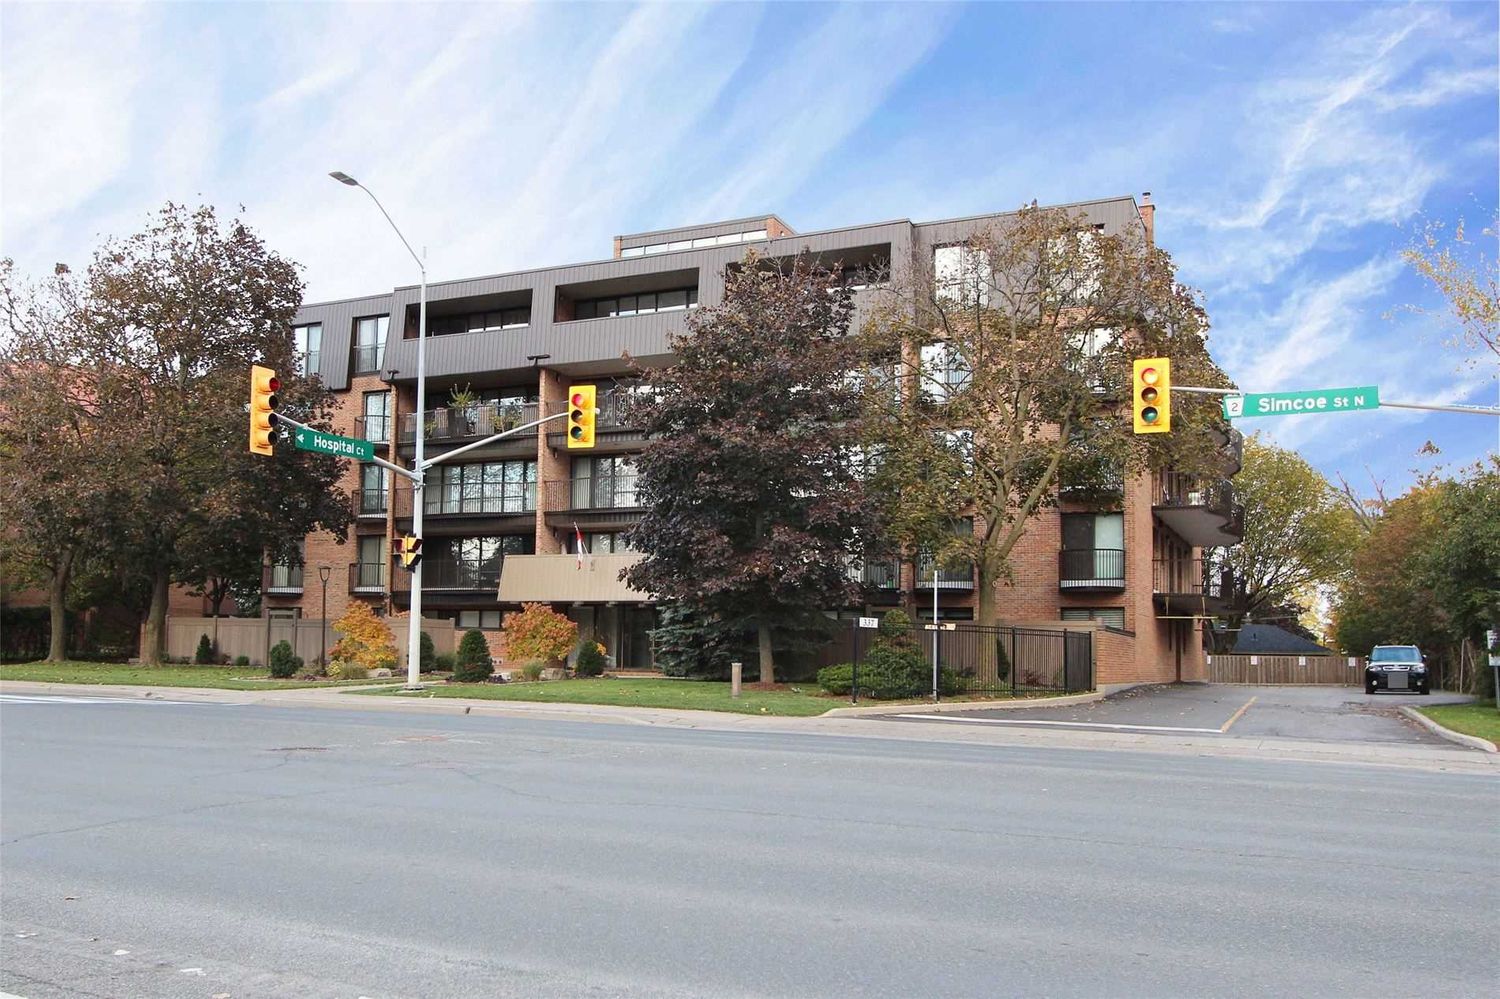 337 Simcoe Street N. Mclaughlin Heights Condos is located in  Oshawa, Toronto - image #1 of 3